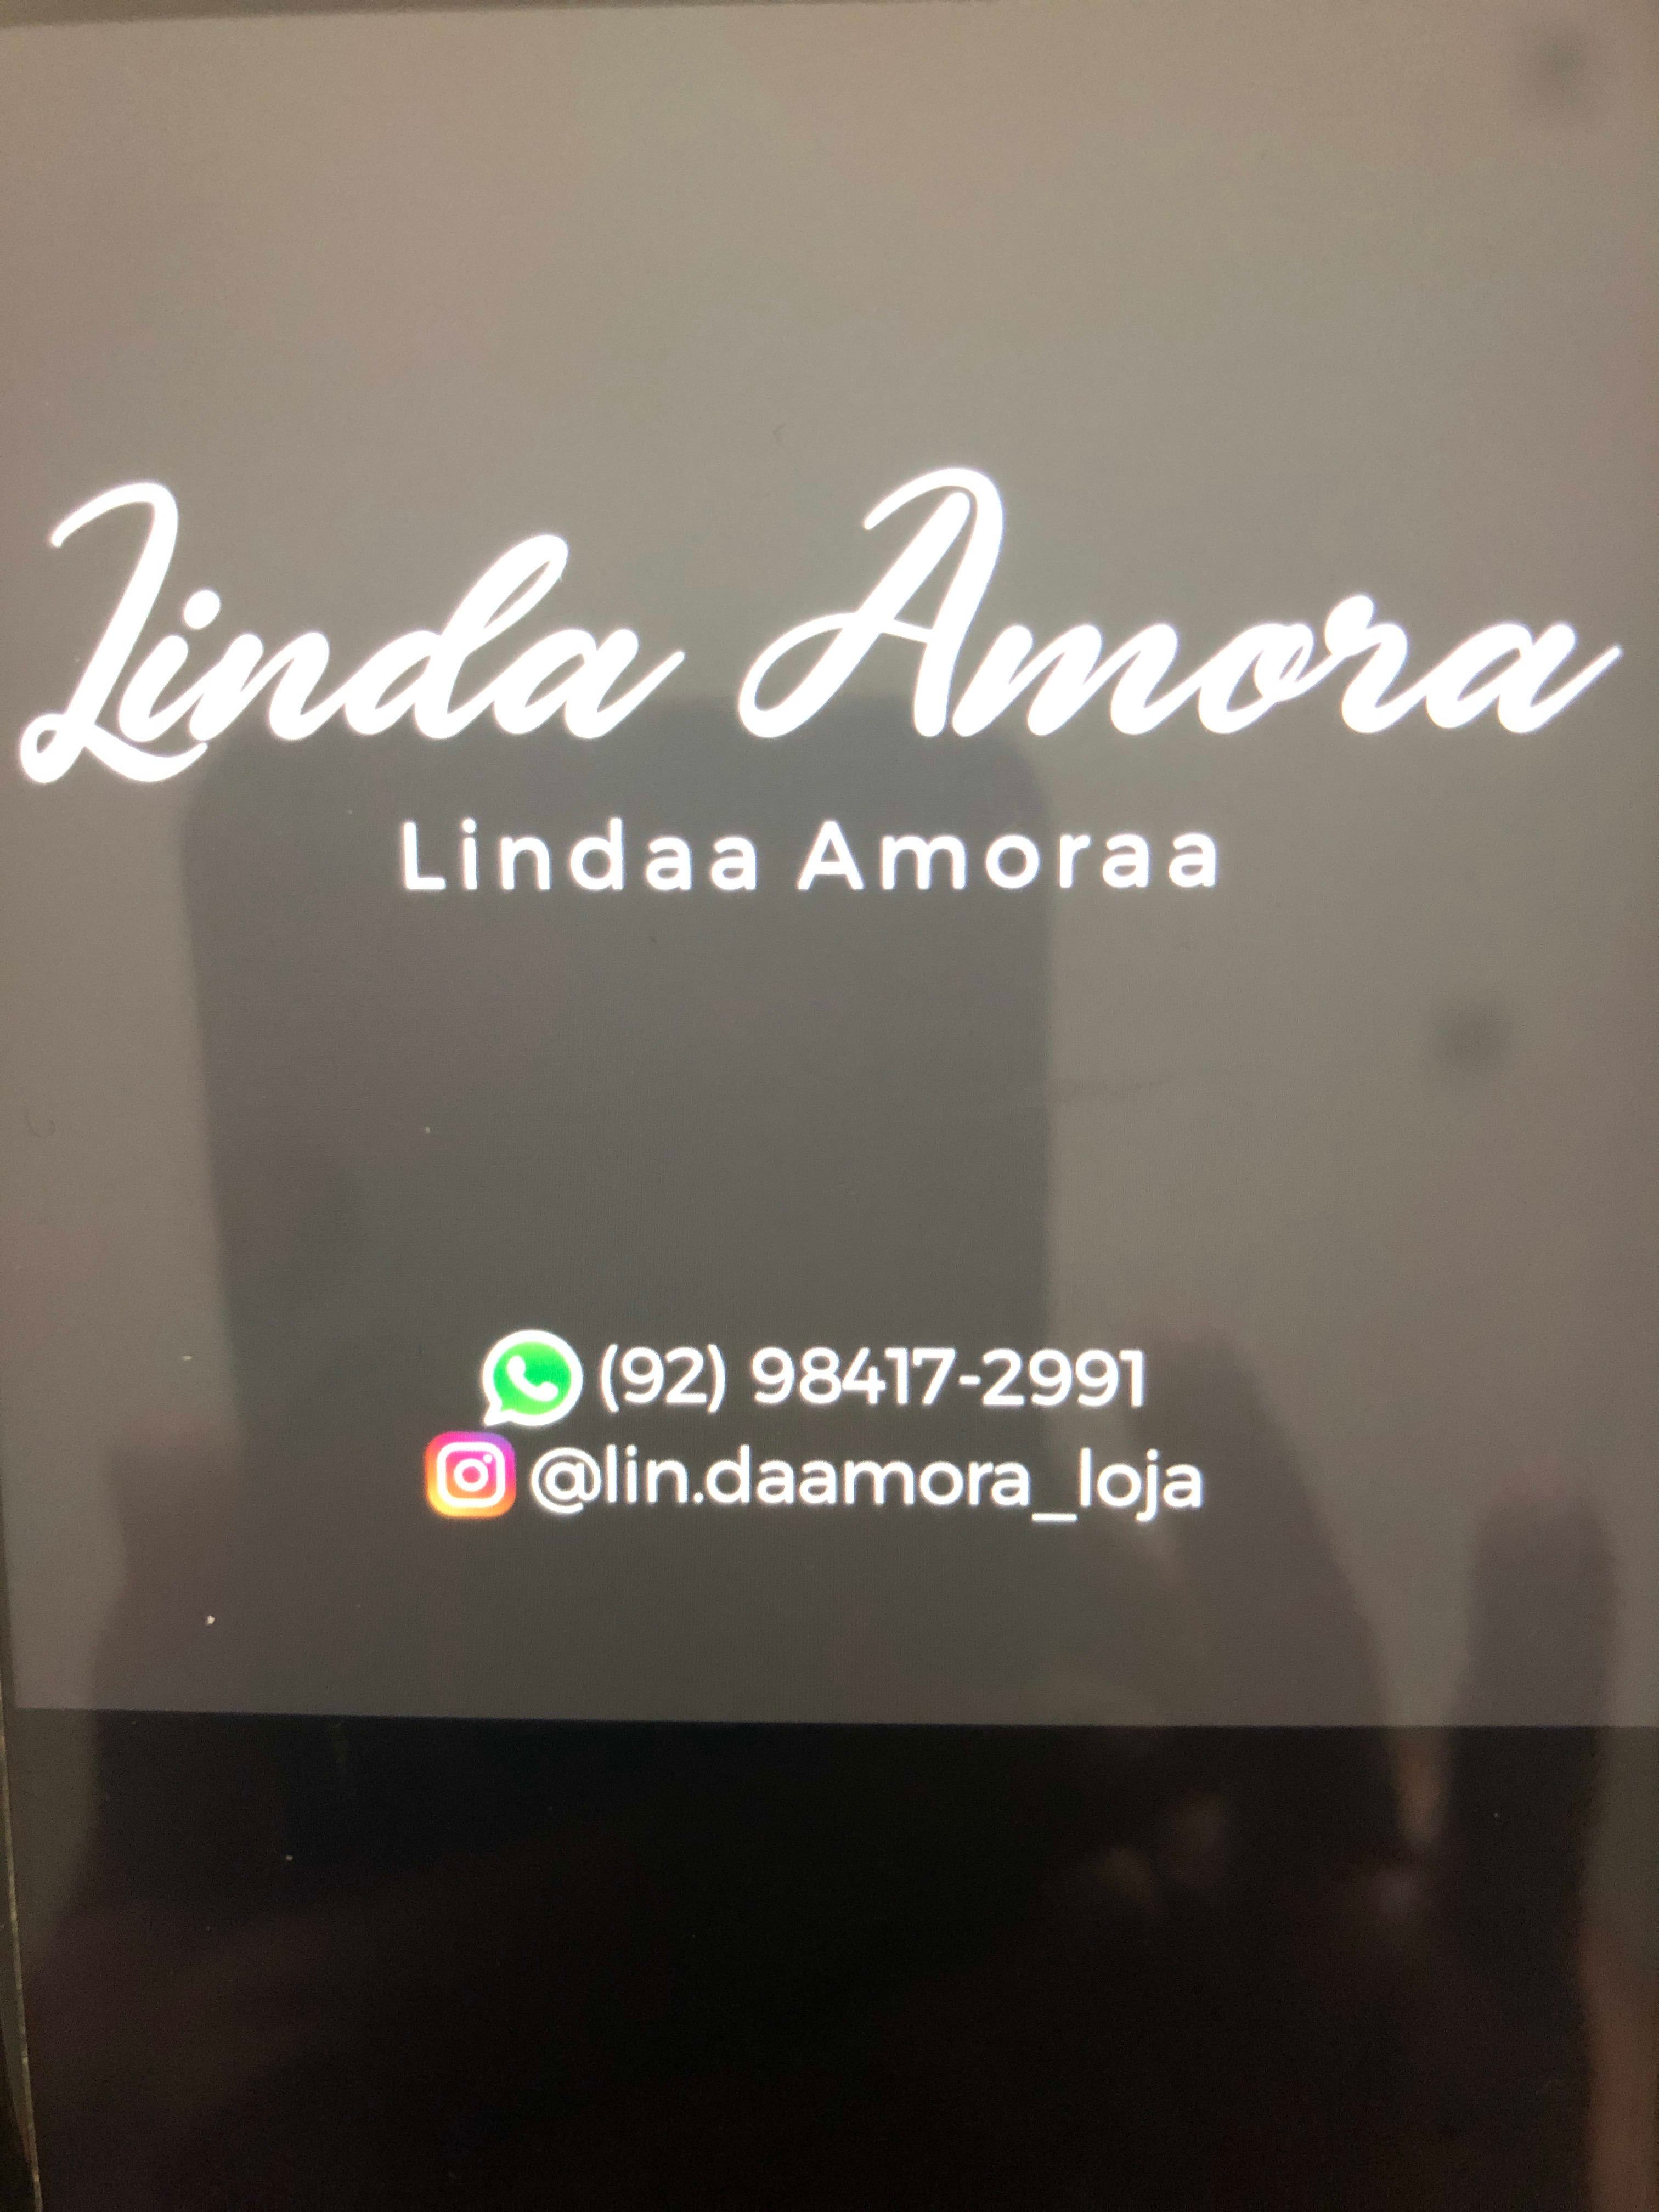 Linda Amora